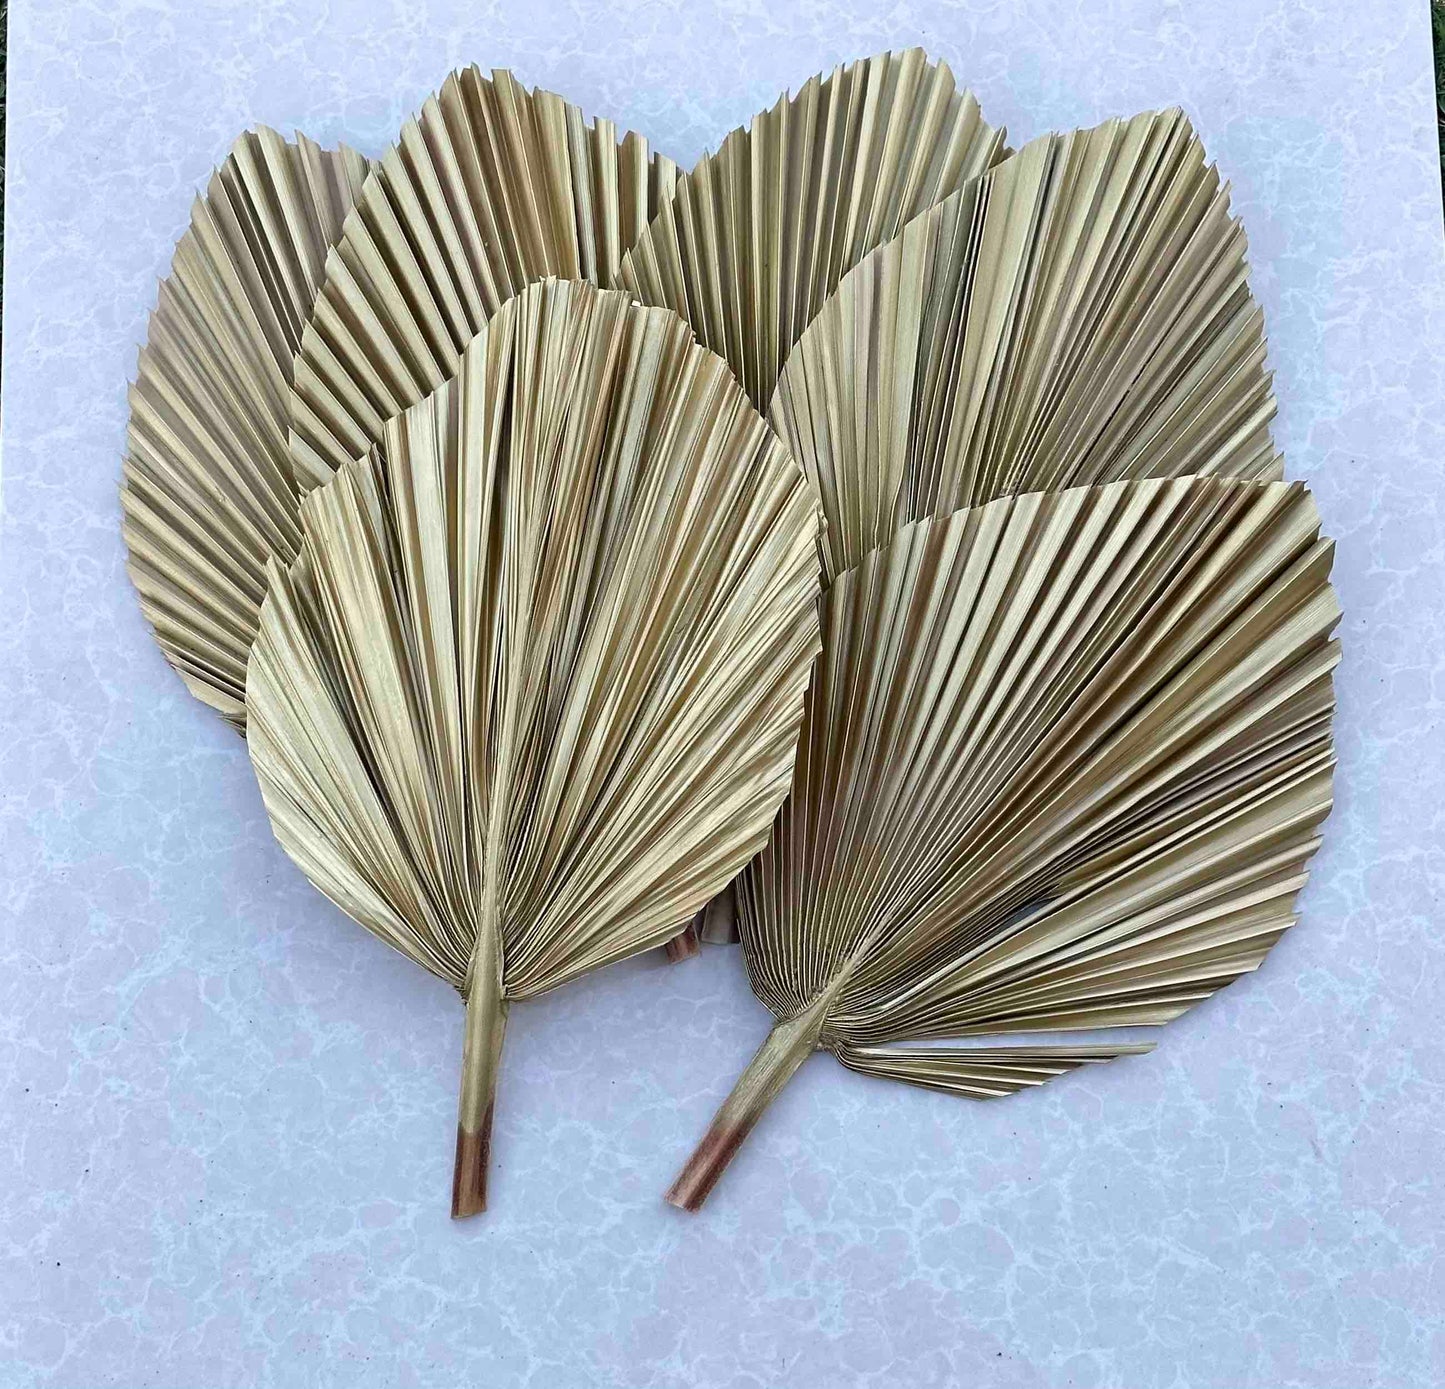 14" GOLD Dried Palm Leaf, Palm Frond, Home/Party/Wedding Boho Decor